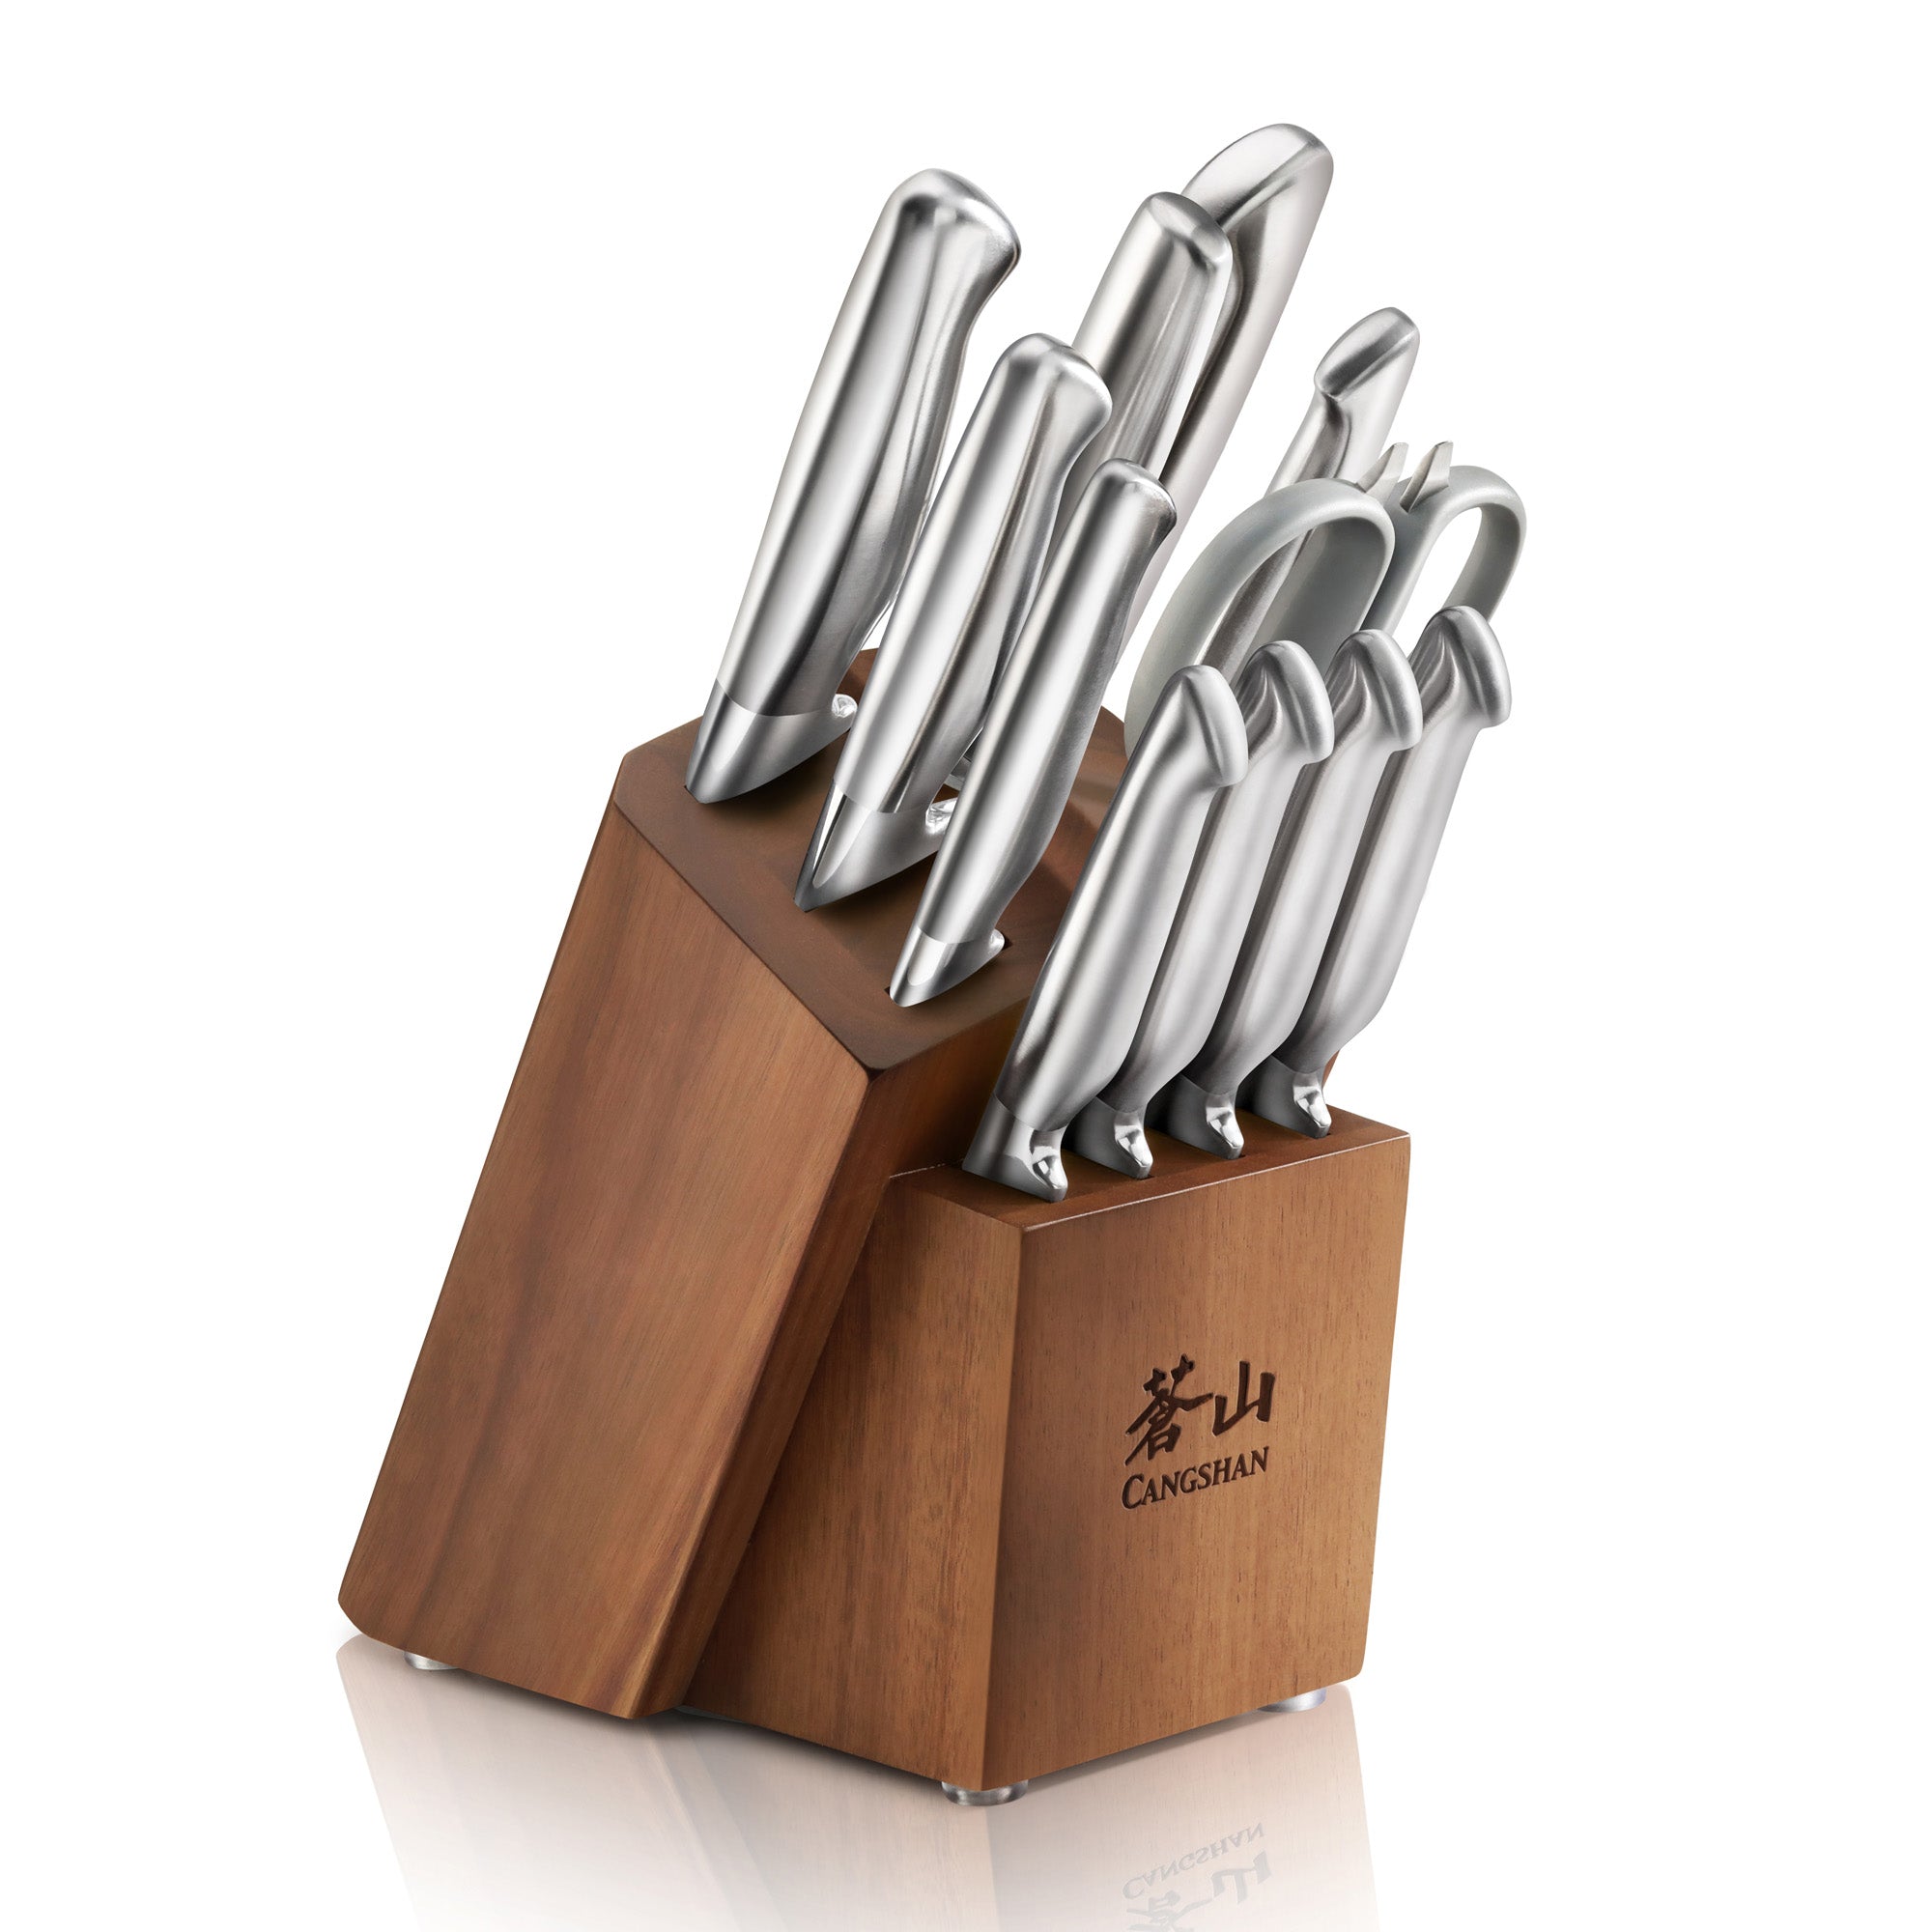 Cangshan 12-piece knife block set - InstaGrandma's Kitchen